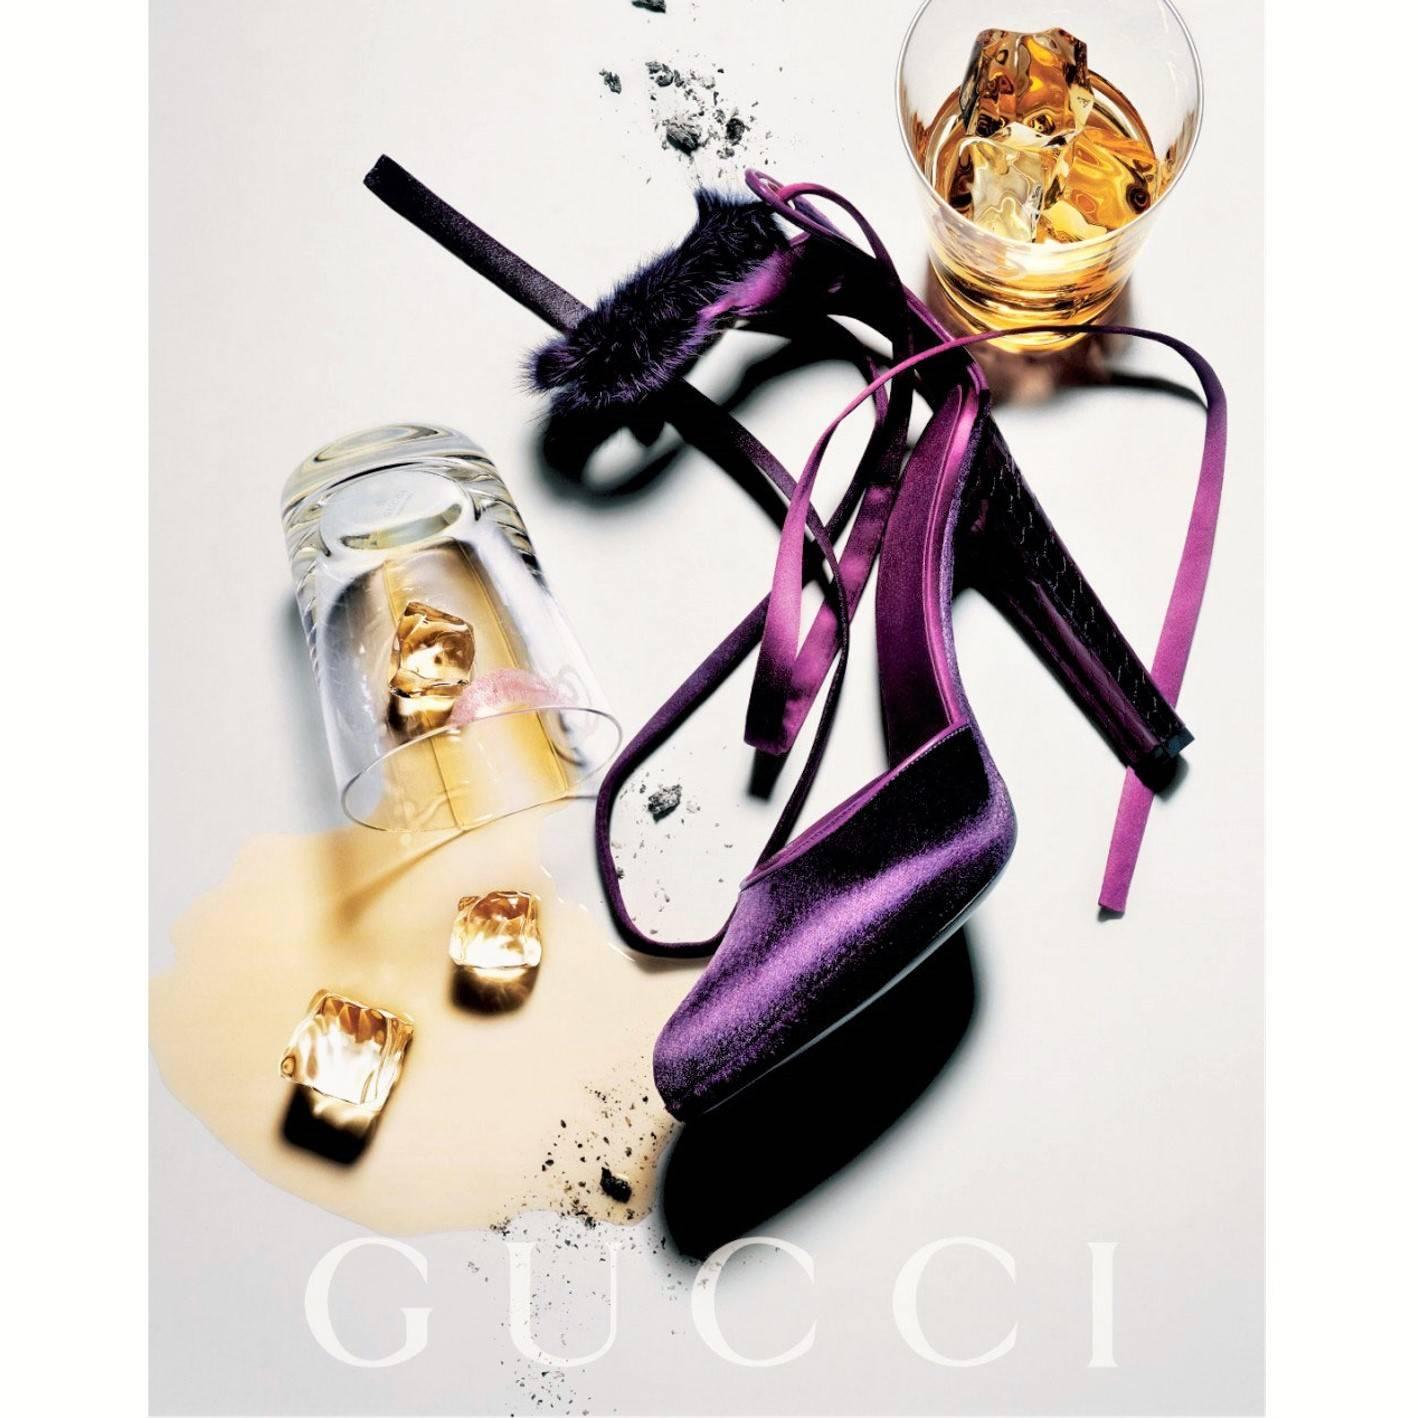 Tom Ford for Gucci Mink Python Heels
Brand New
U.S. Size: 6
* Mink, Satin, Python and Velvet heels
* Tom Ford's 